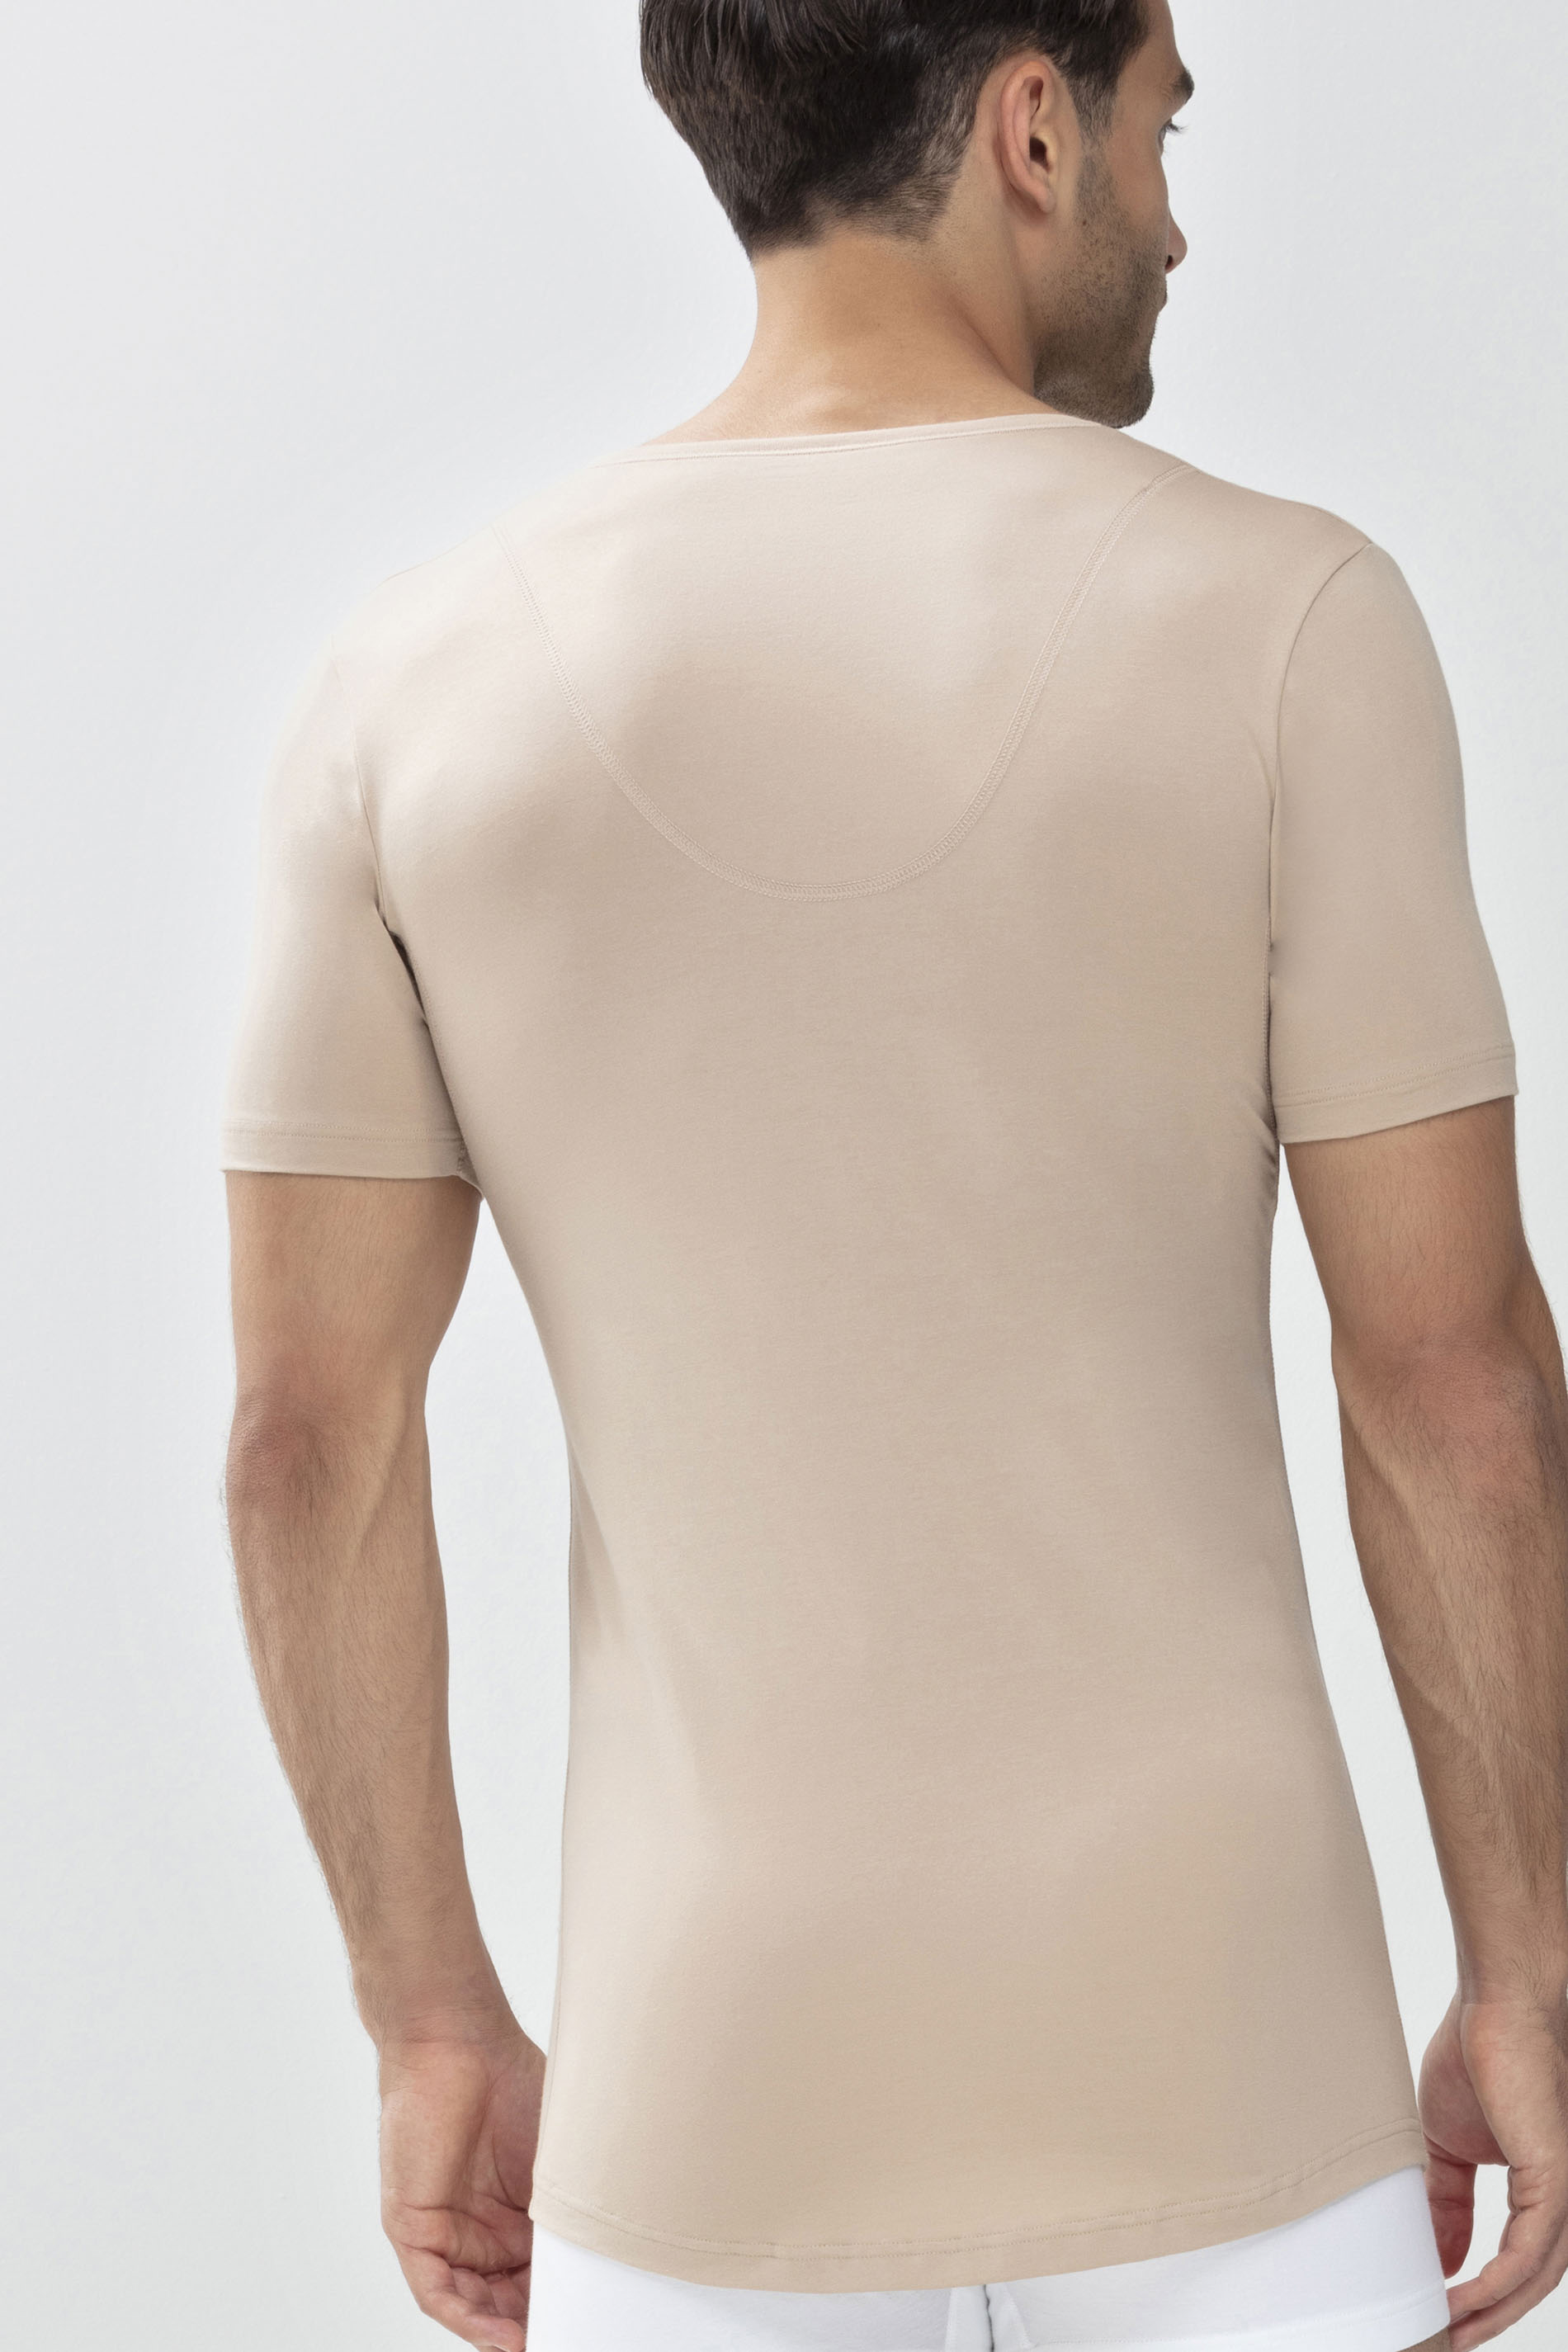 Das Drunterhemd - V-Neck | Slim fit Light Skin Serie Dry Cotton Functional  Rear View | mey®